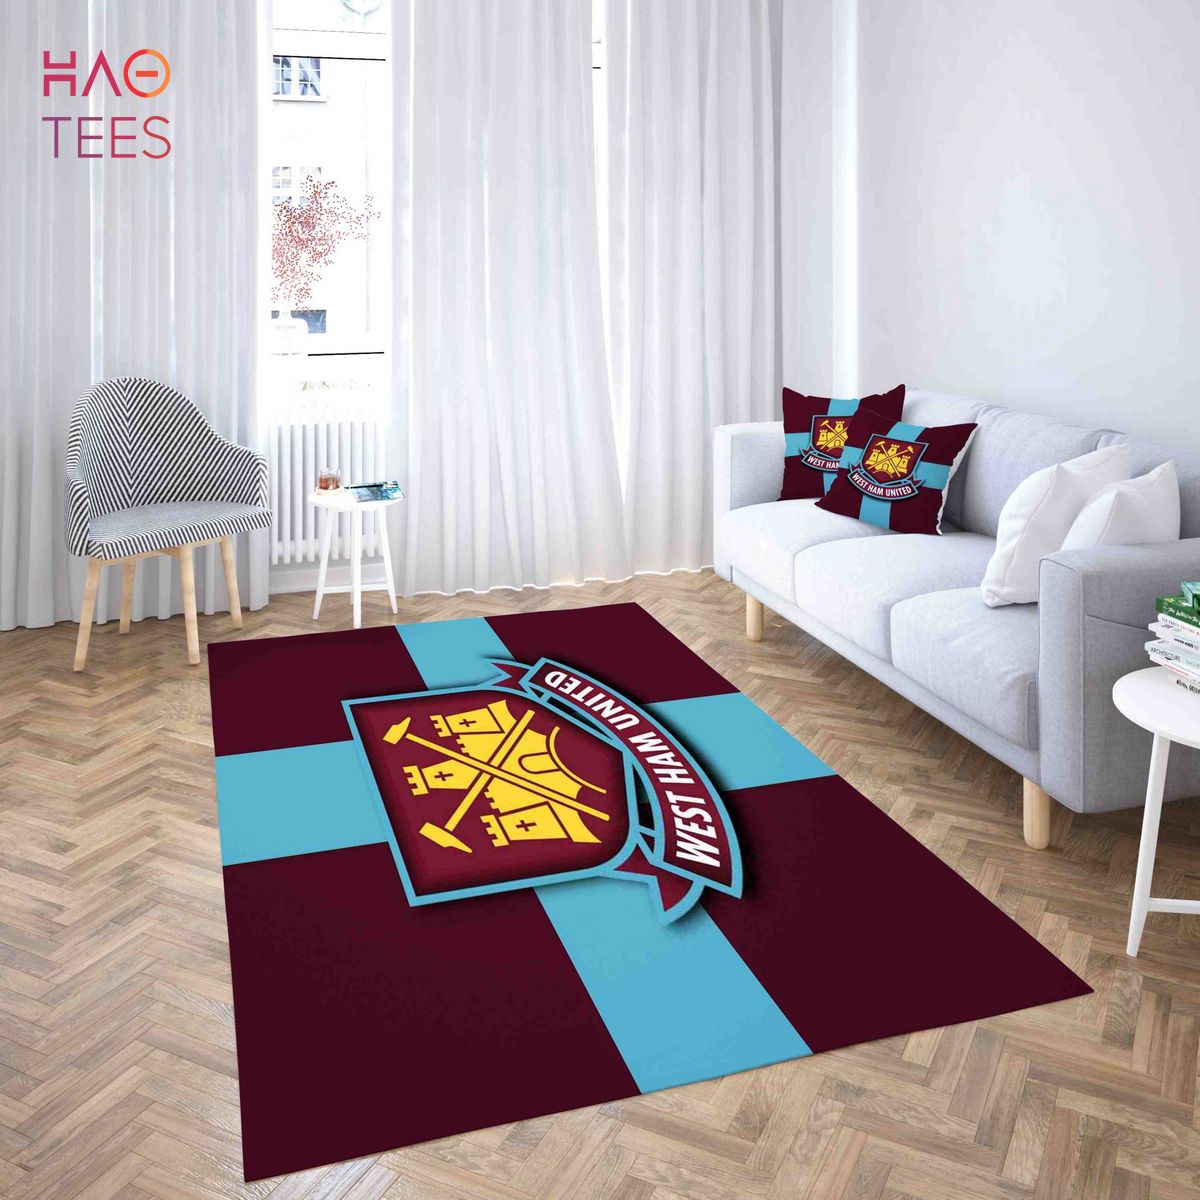 BEST West Ham United Football Club Many Colors Carpet Living Room Rugs